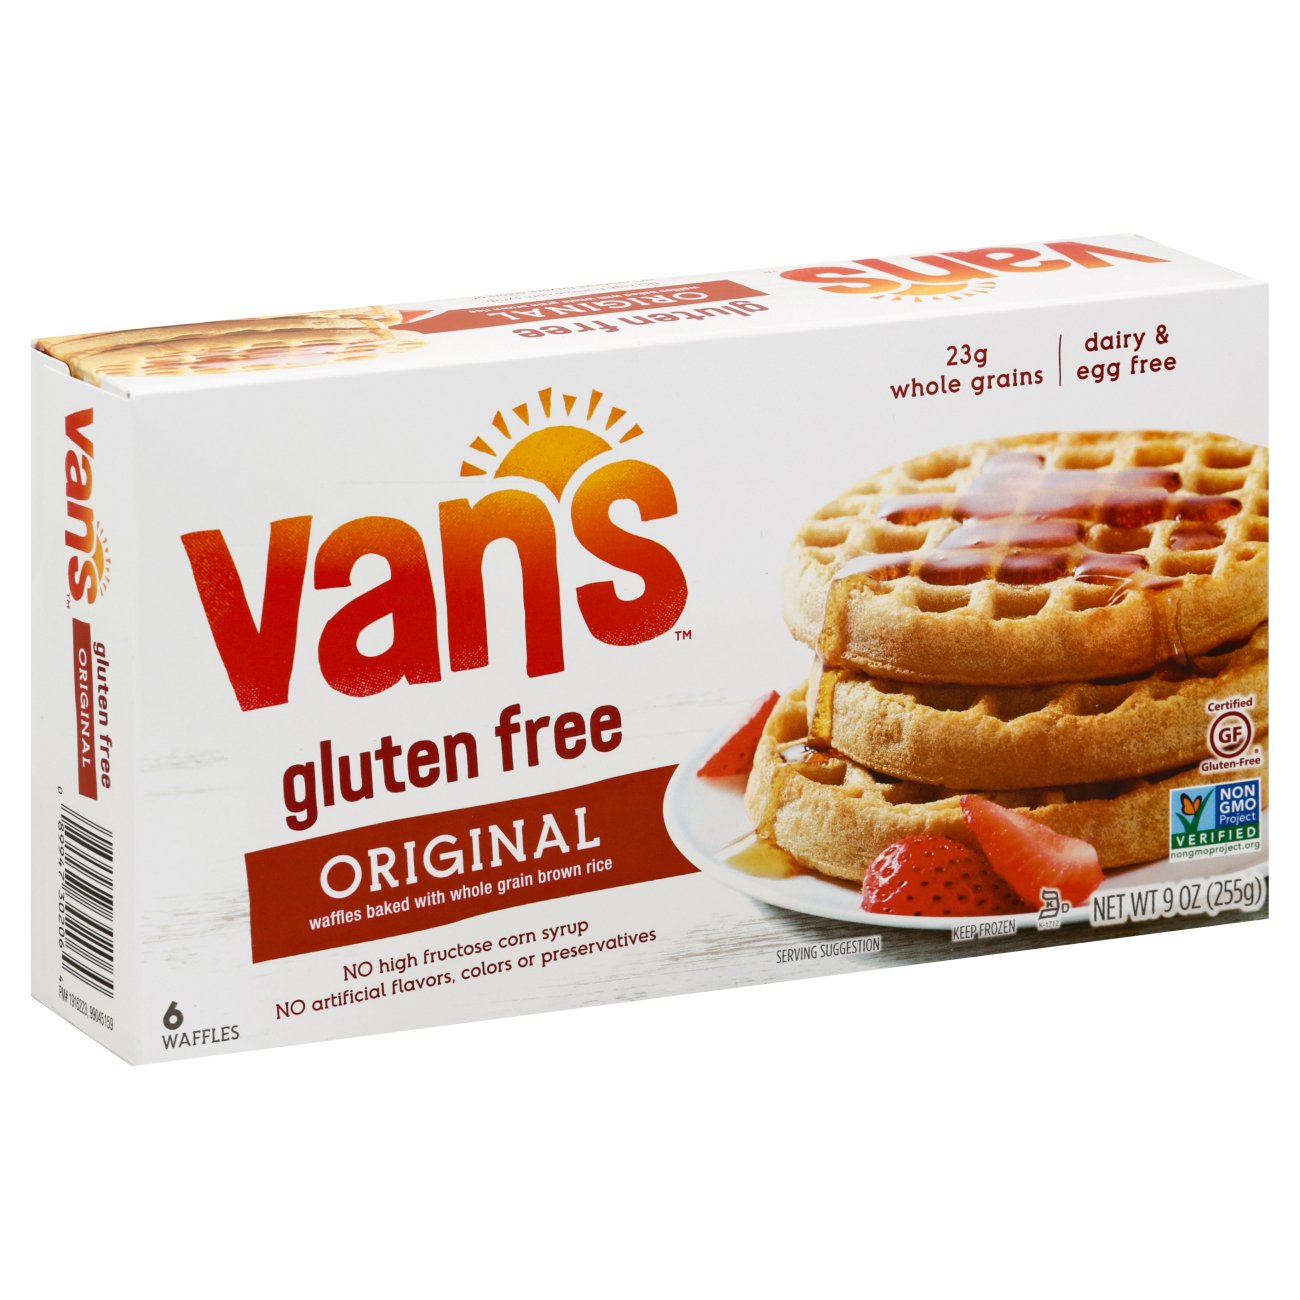 vans gluten free waffle ingredients